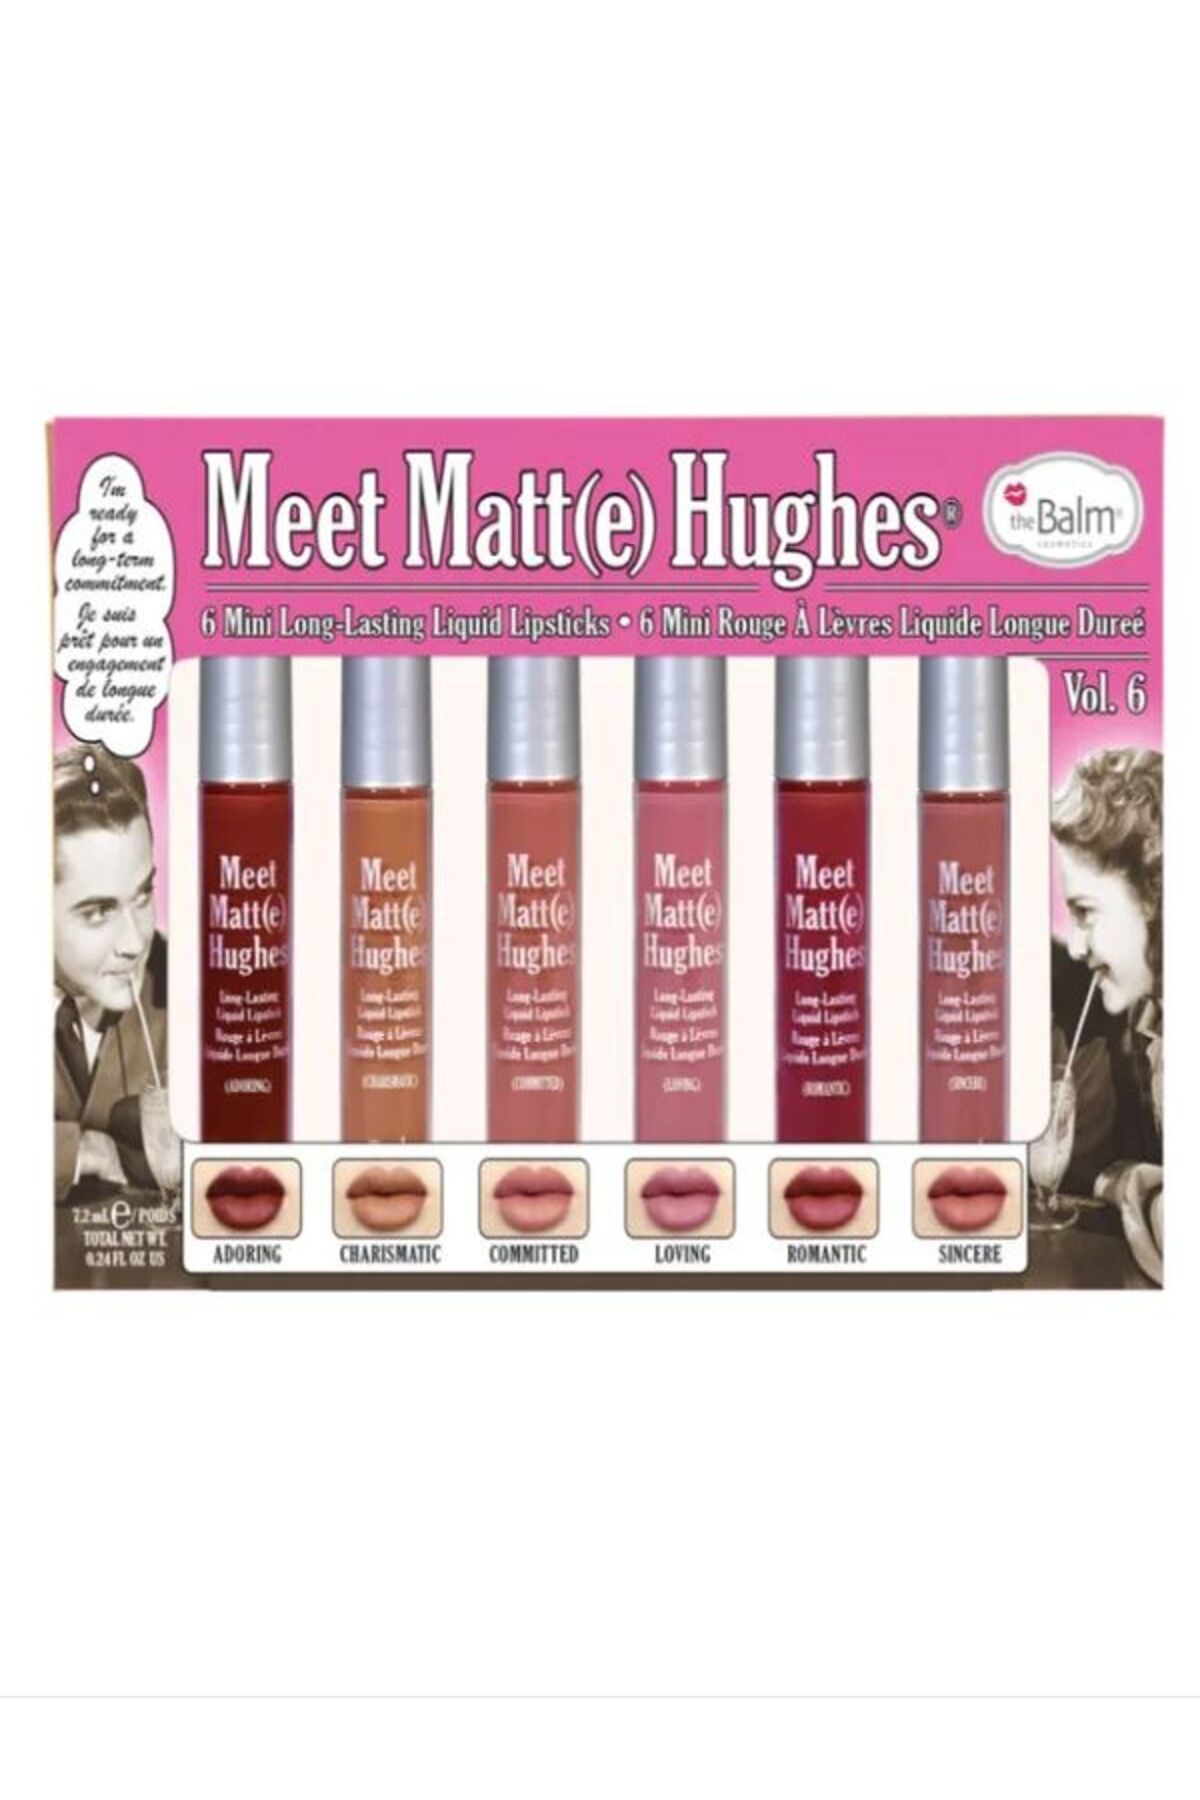 the balm Meet Matte Hughes 6'lı Ruj Seti seyahat boy LİKİT MAT RUJ 1.2 ML Lipsticks